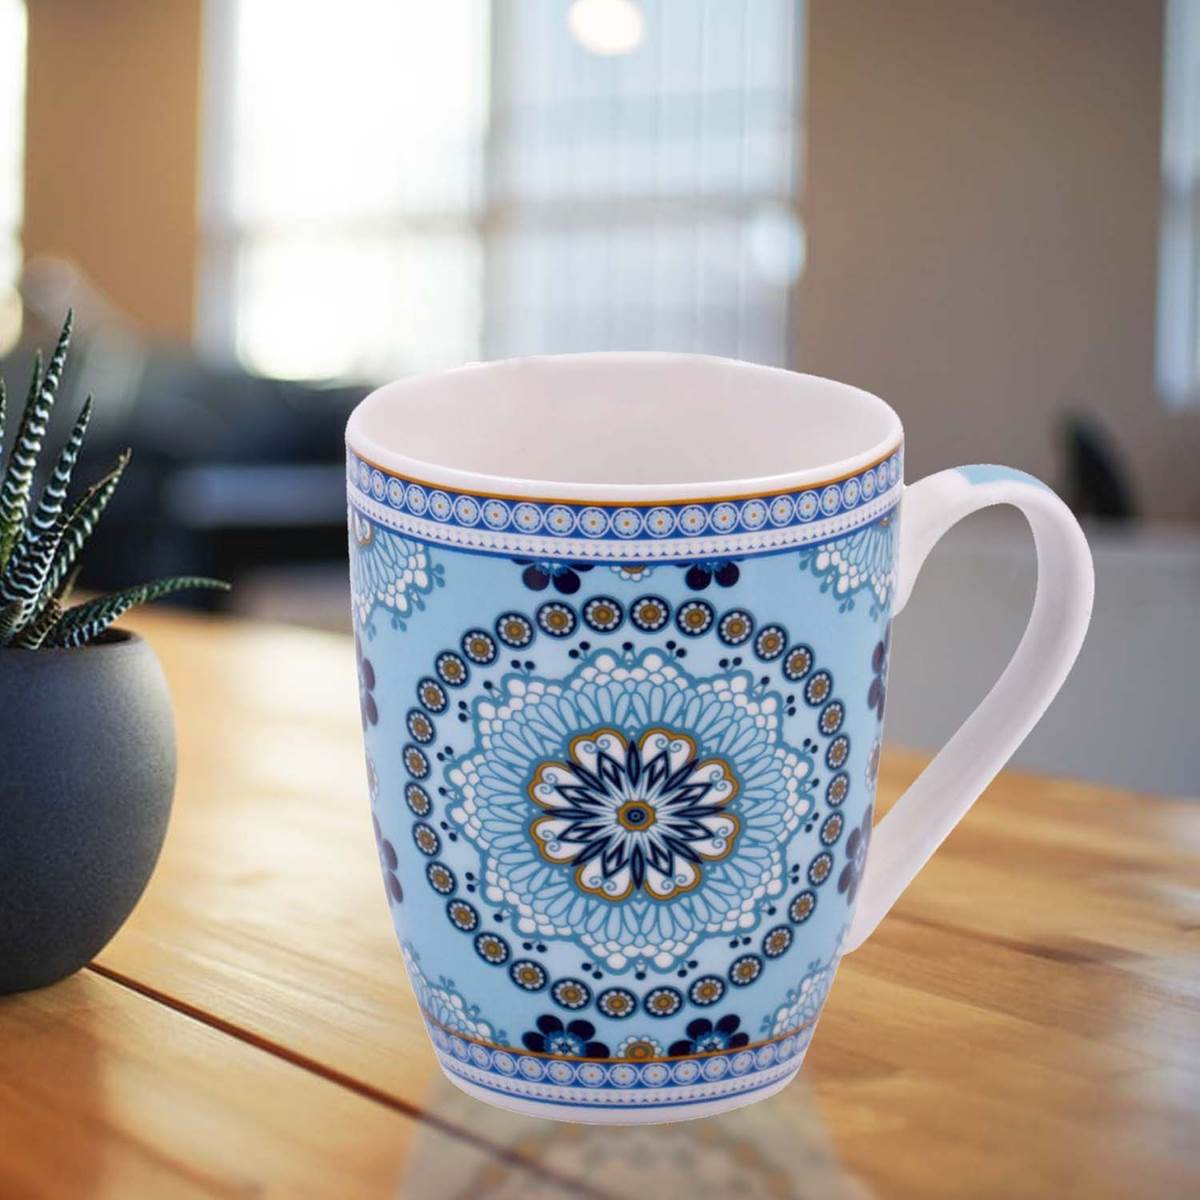 Printed Ceramic Coffee or Tea Mug with handle - 325ml (4129G-B)